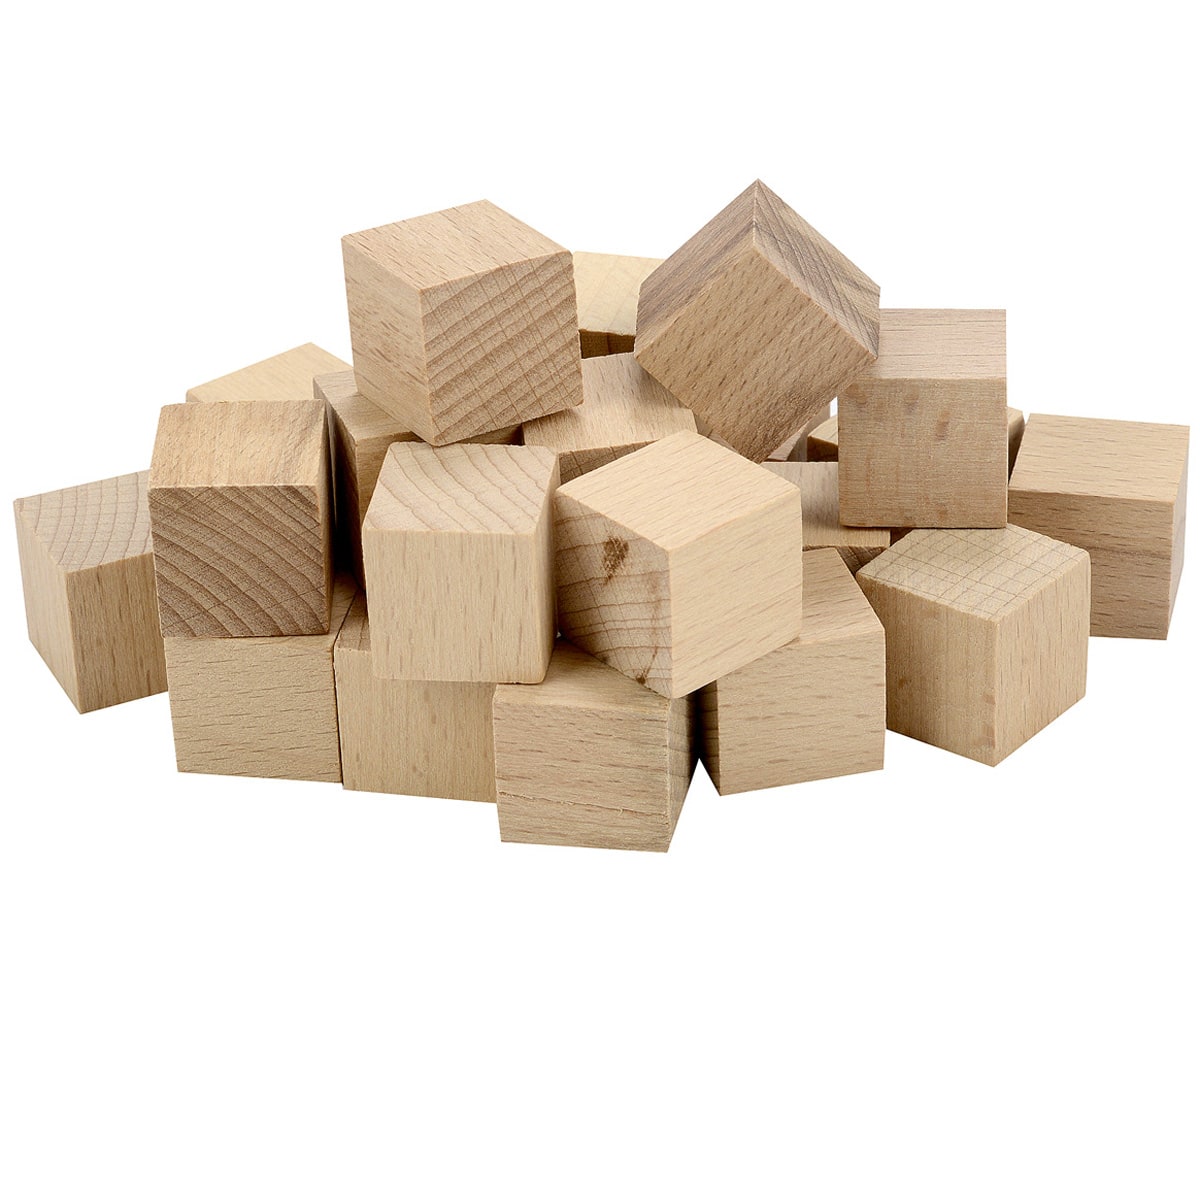 Qty 30-2" x 2" Wood Craft Blocks  2x2x2 Wood Cubes NATURAL Unfinished 